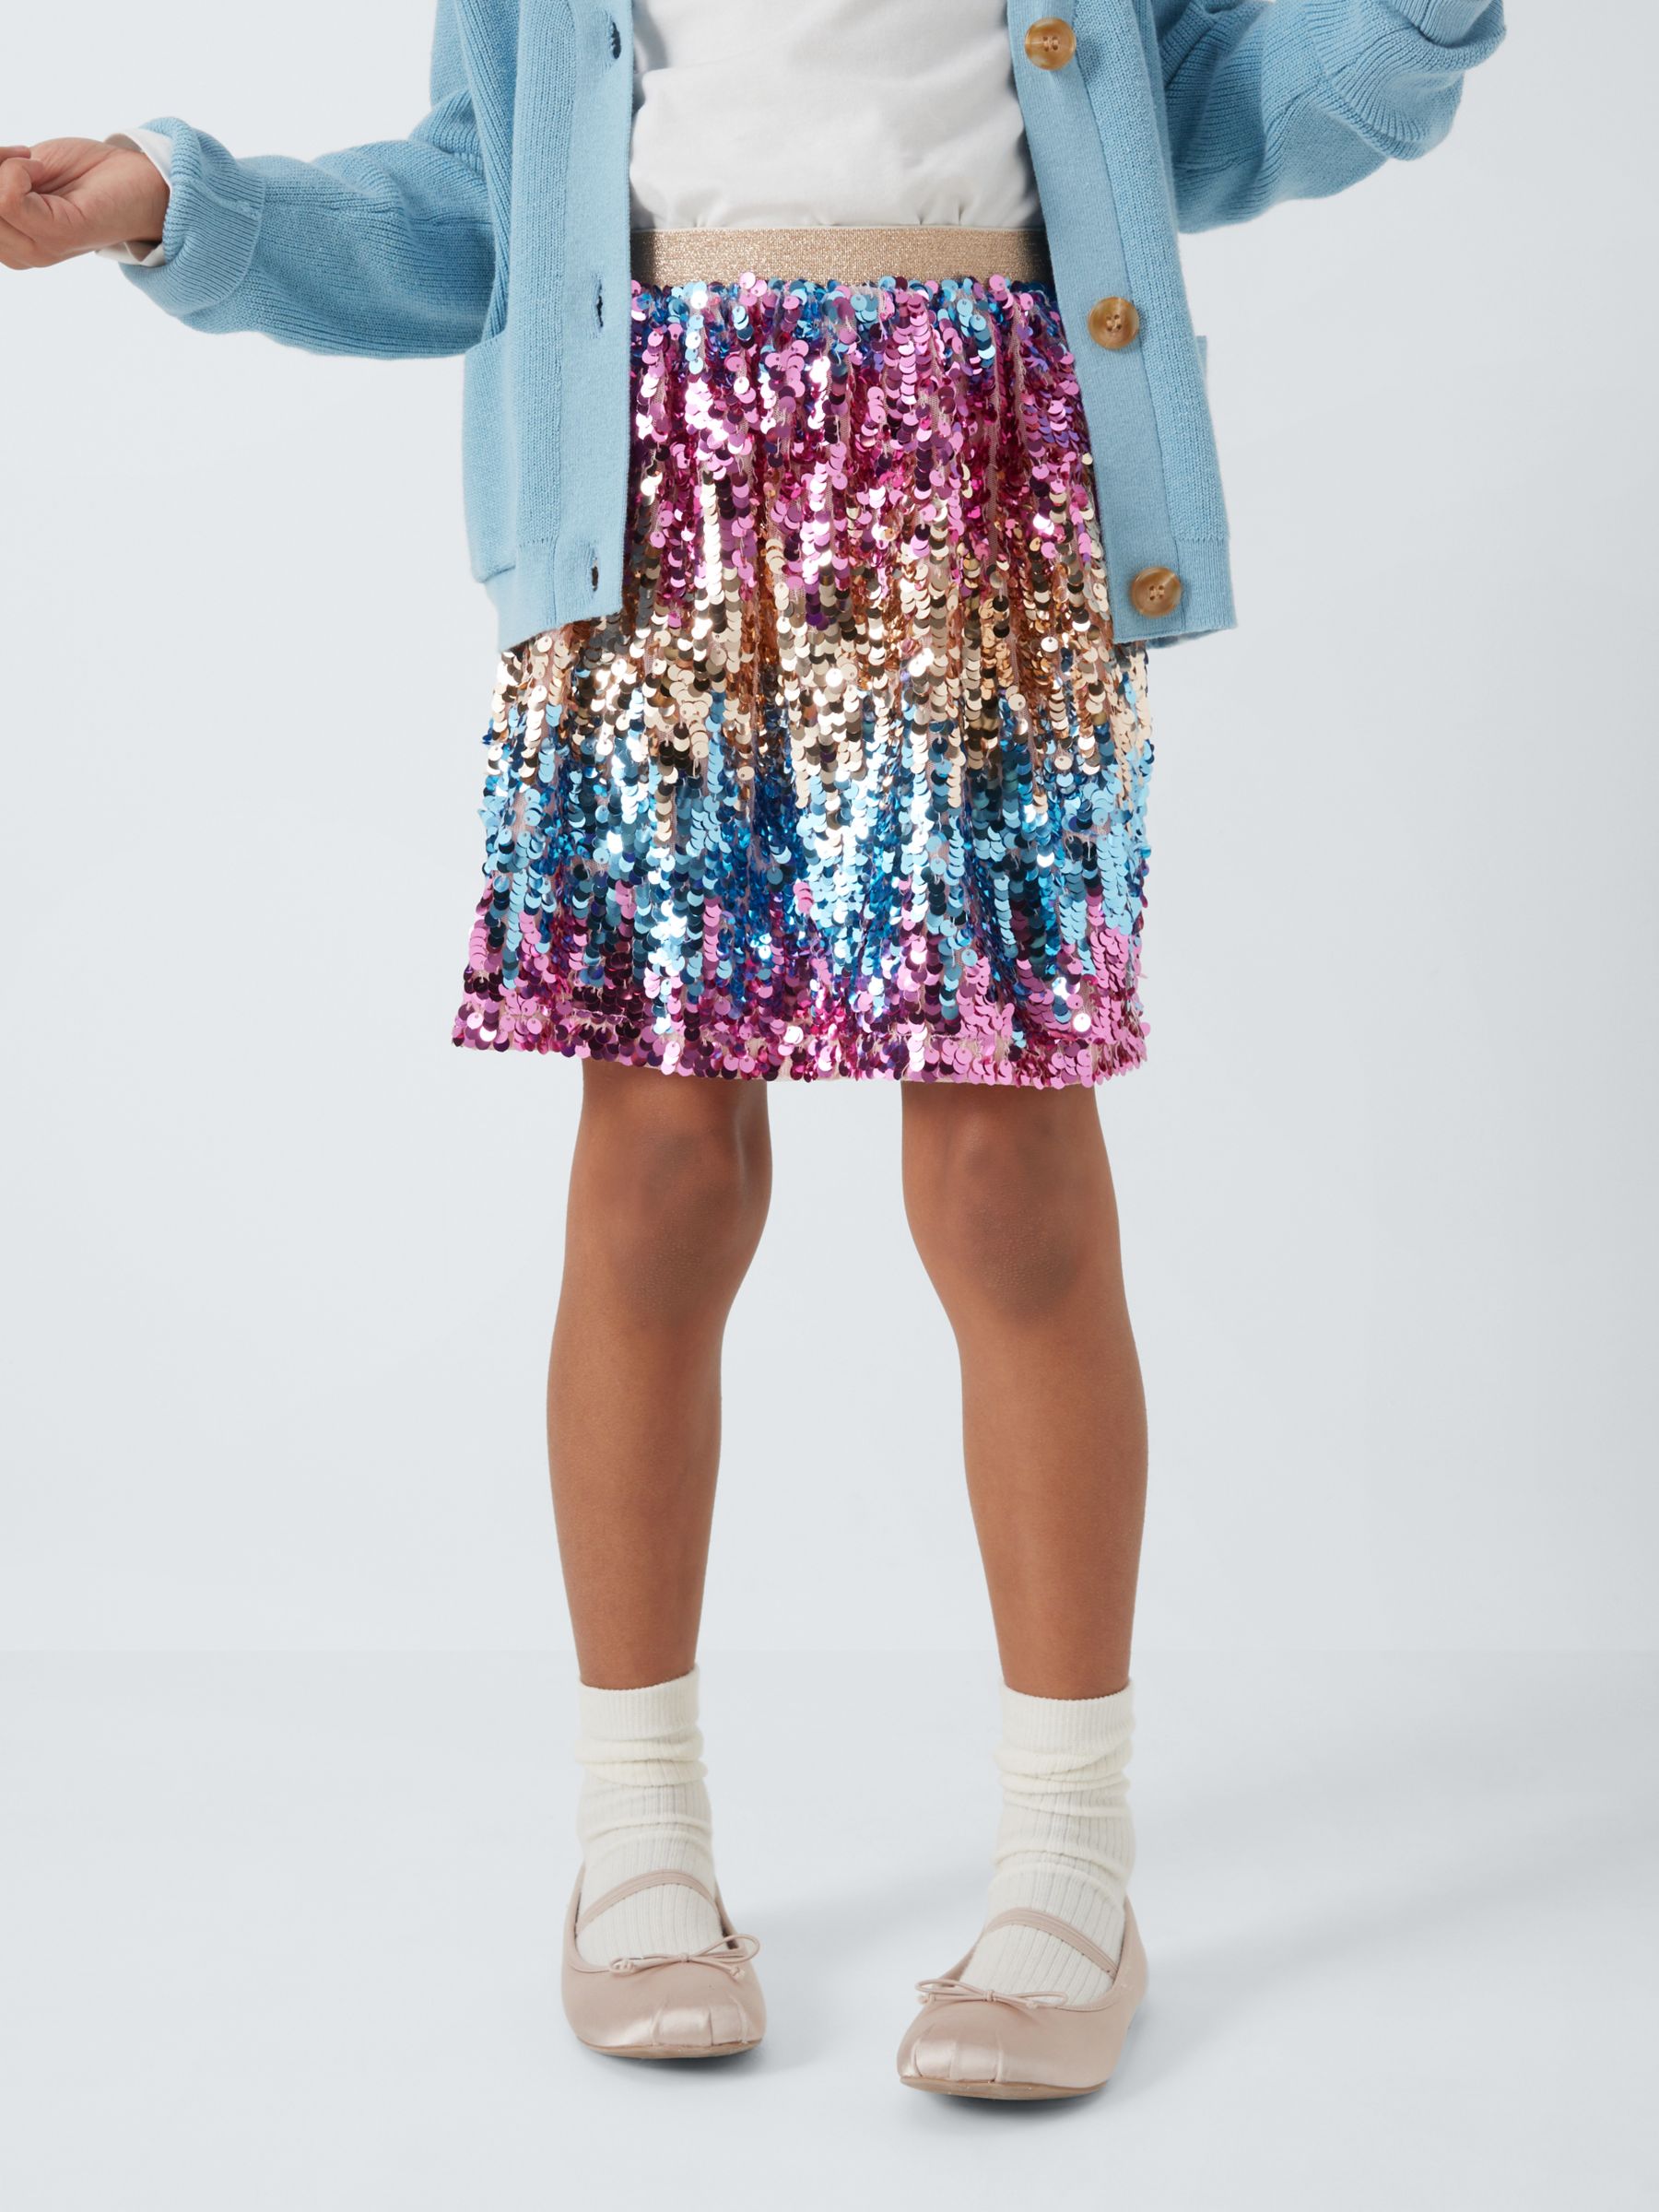 John Lewis Kids' Sequin Ombre Skirt, Multi, 11 years